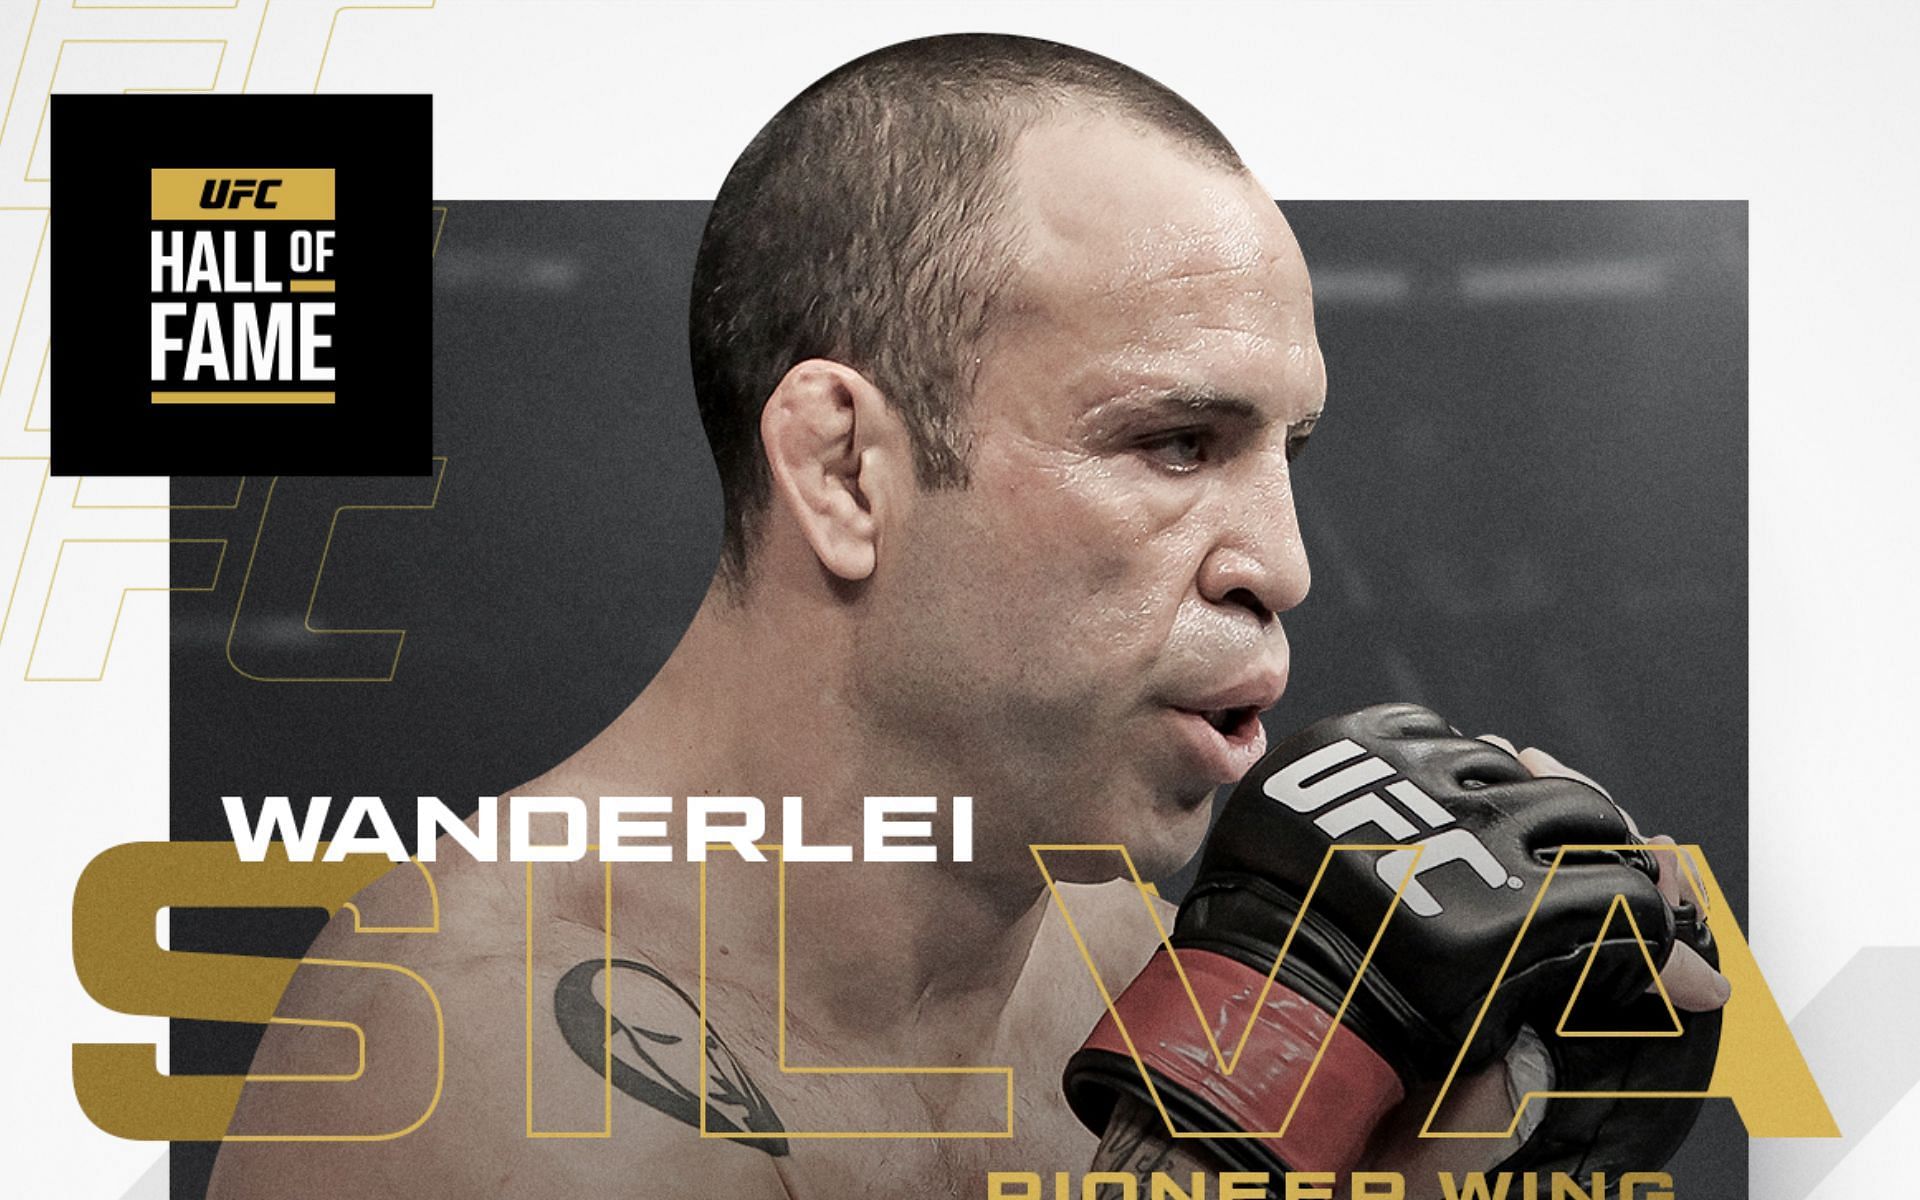 Despite ending his career under a black cloud, Wanderlei Silva is part of the UFC